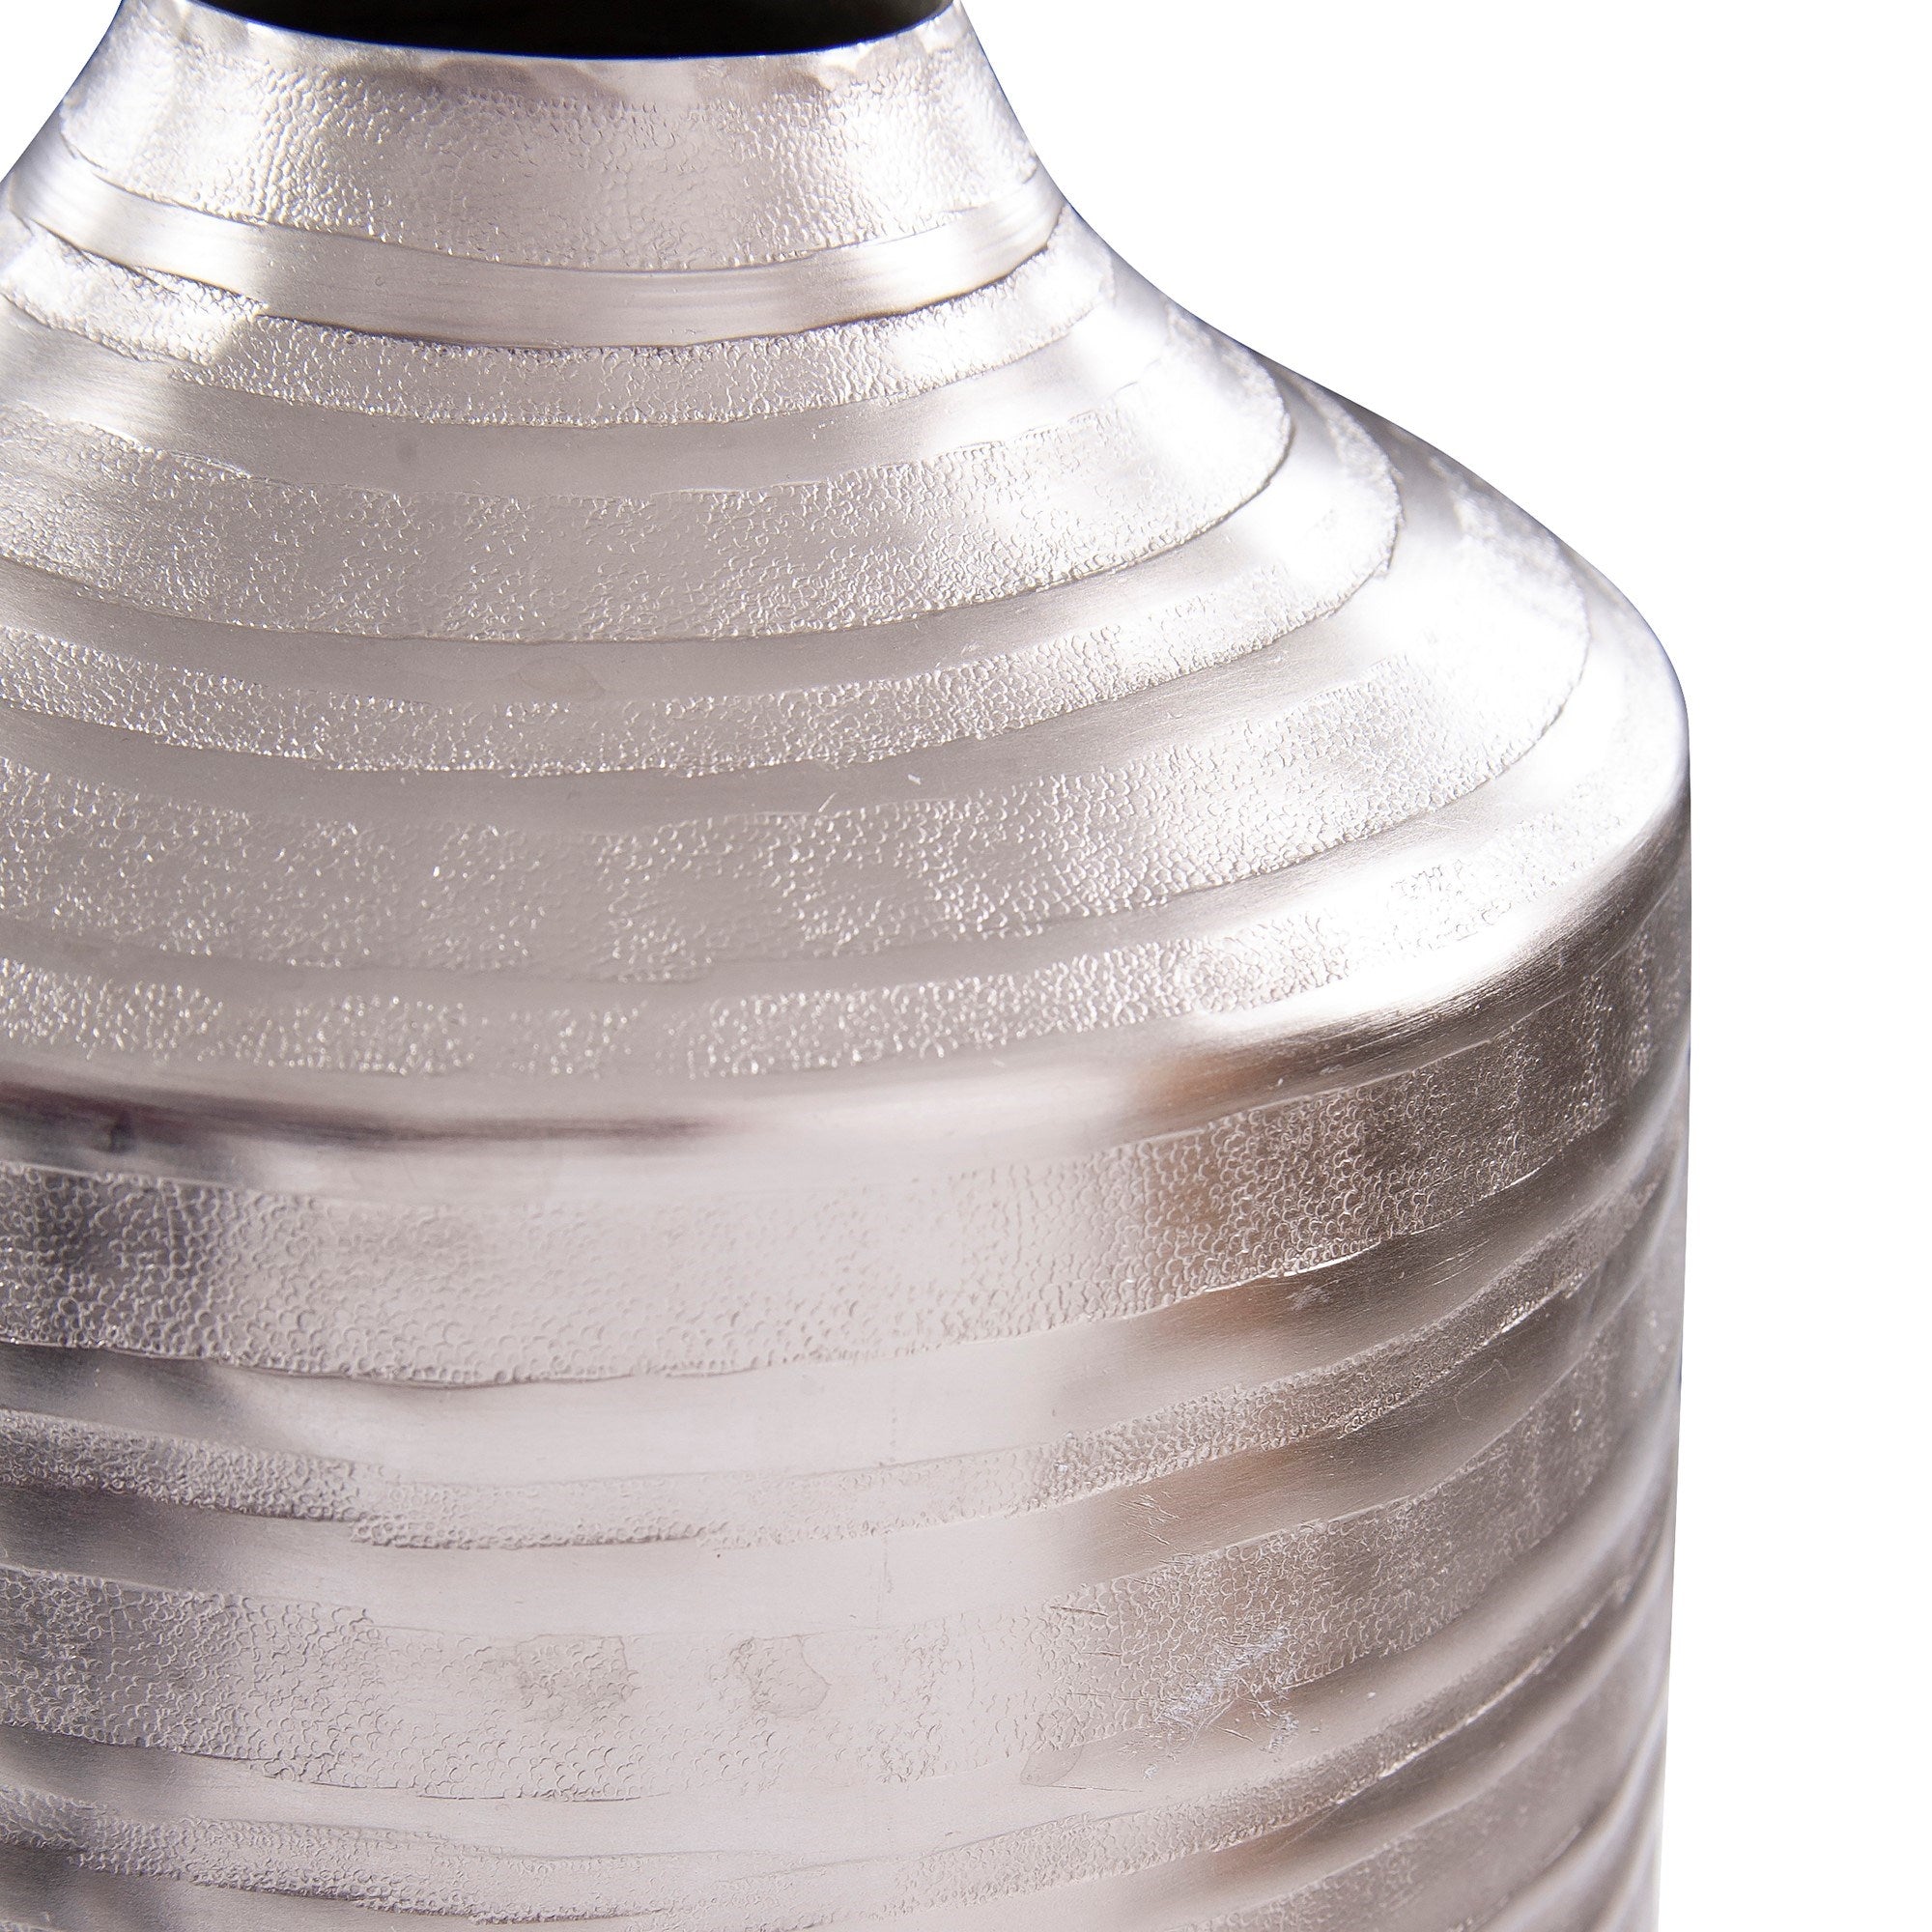 Chiseled Silver Cylinder Vase, Large